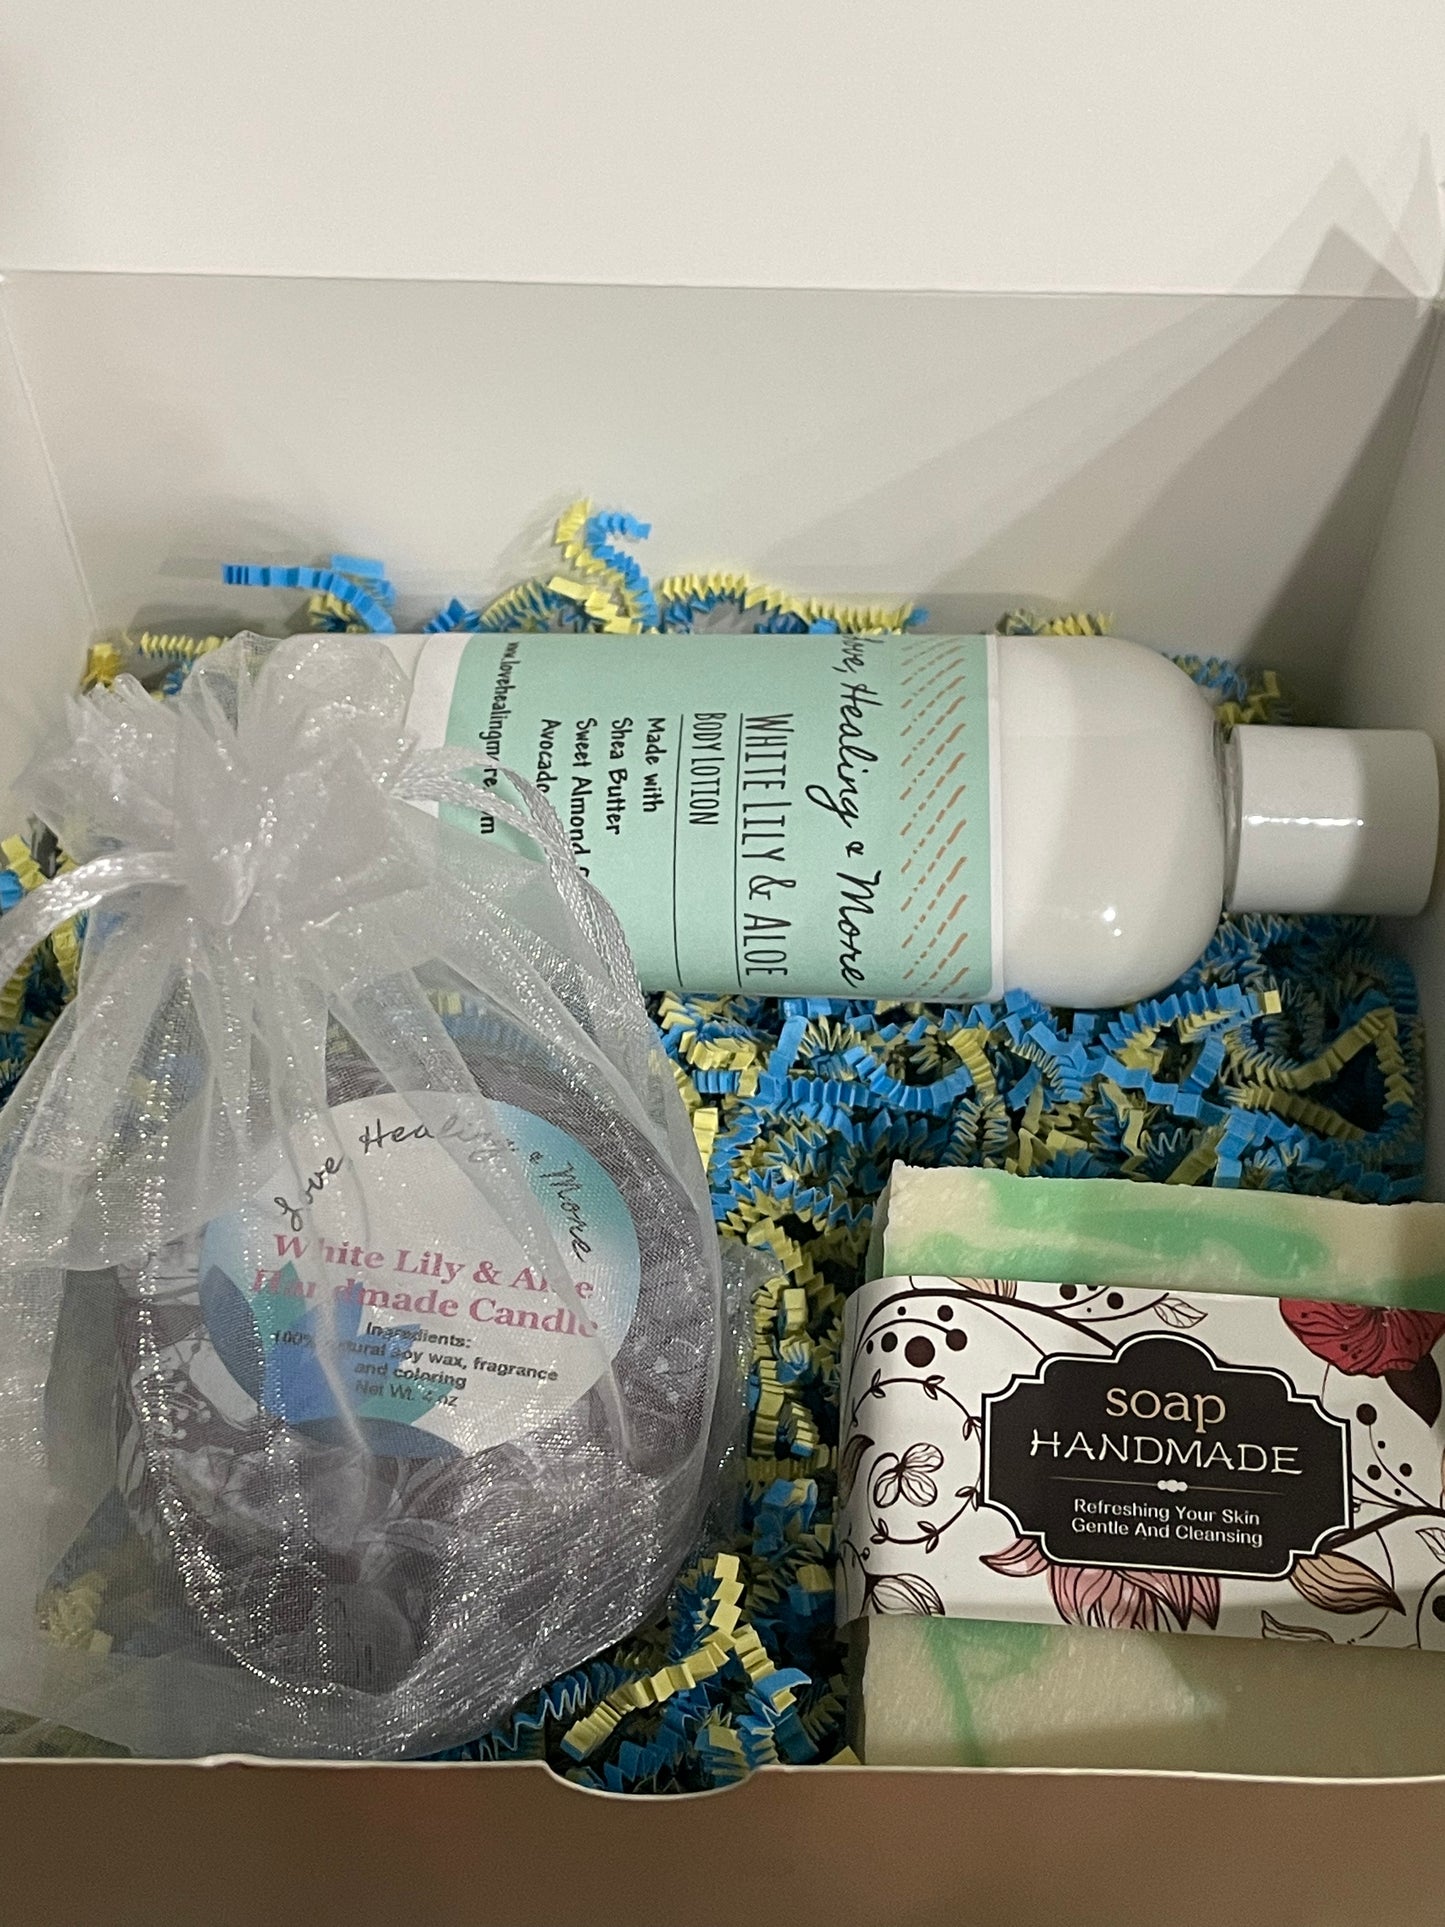 Handmade White Lily & Aloe Fragrance Gift Box